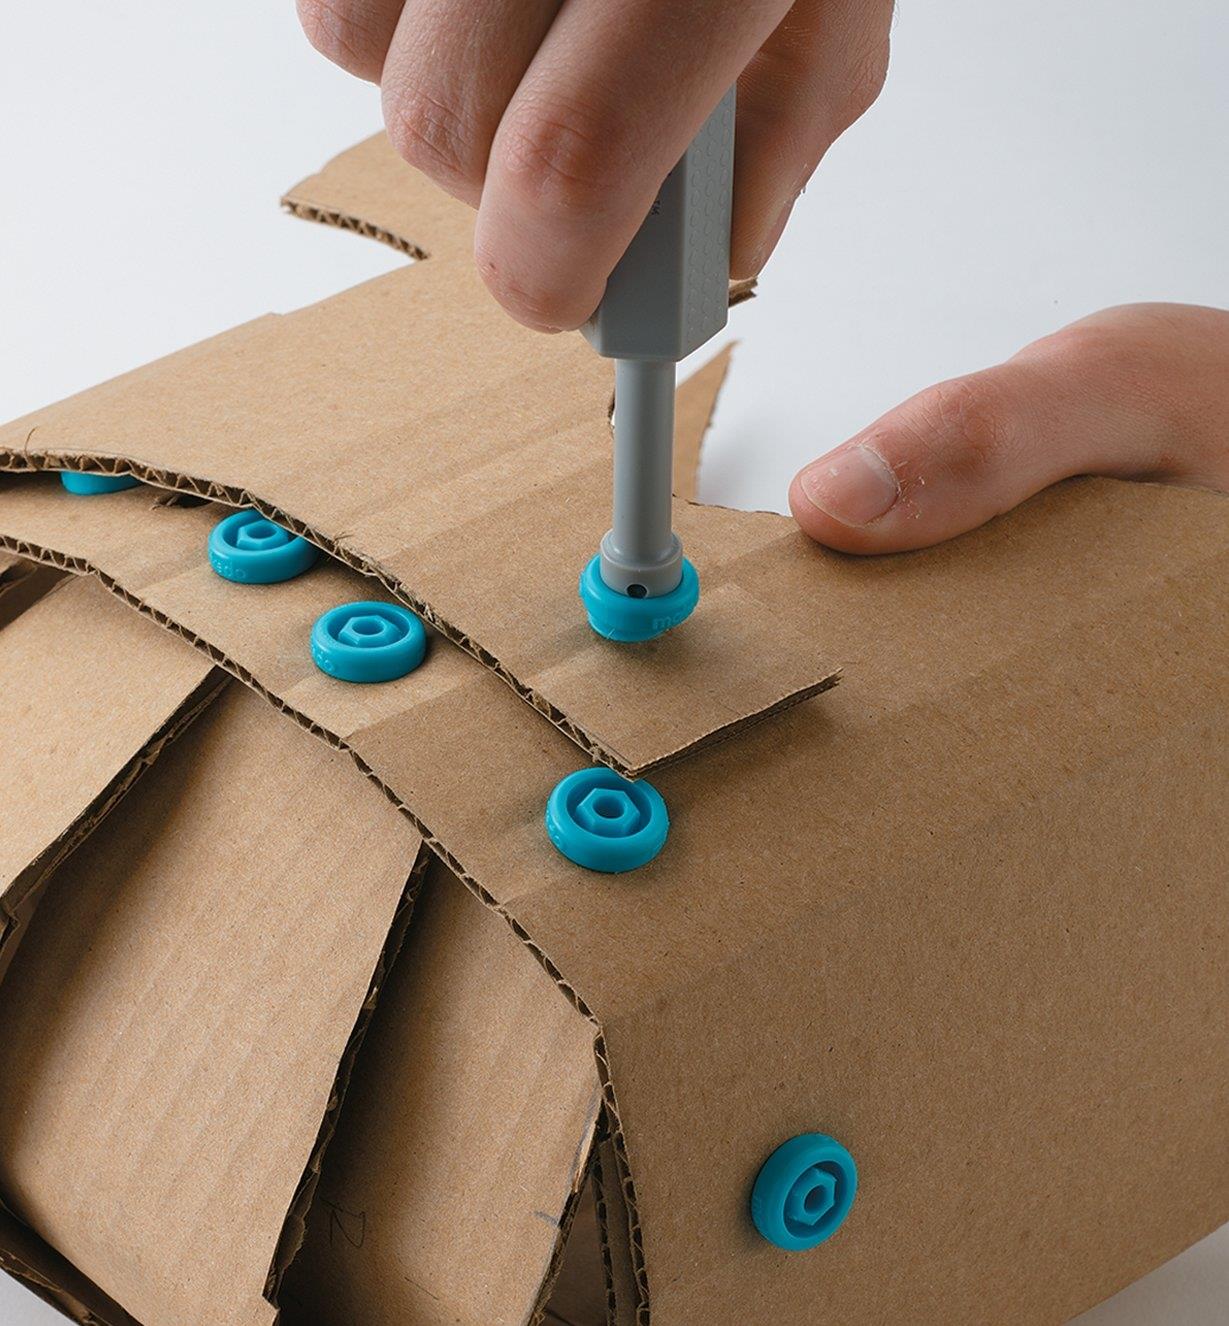 Fastening cardboard together using Makedo plastic screws and screwdriver